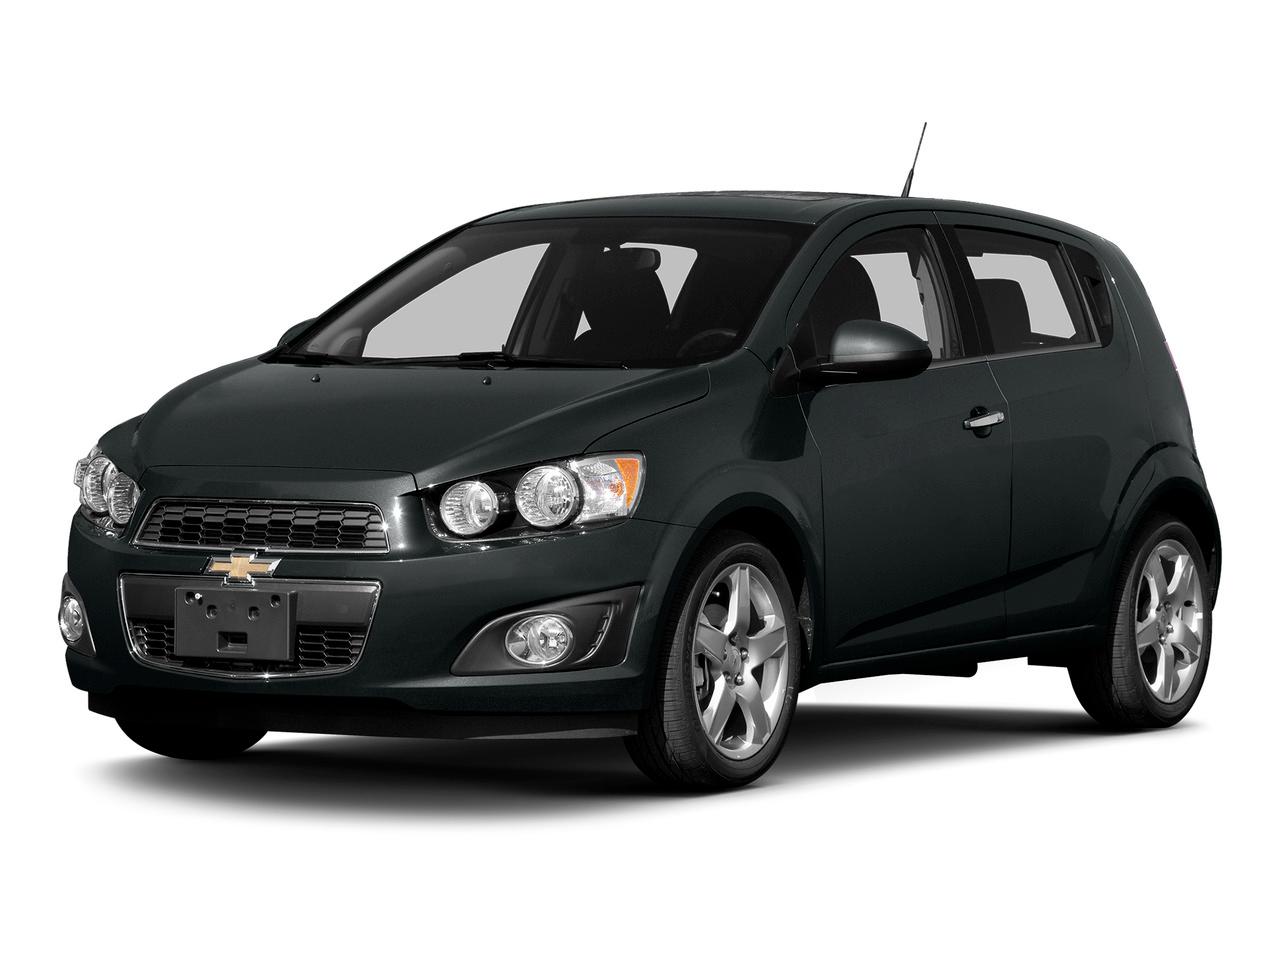 2015 Chevrolet Sonic Vehicle Photo in Mobile, AL 36695